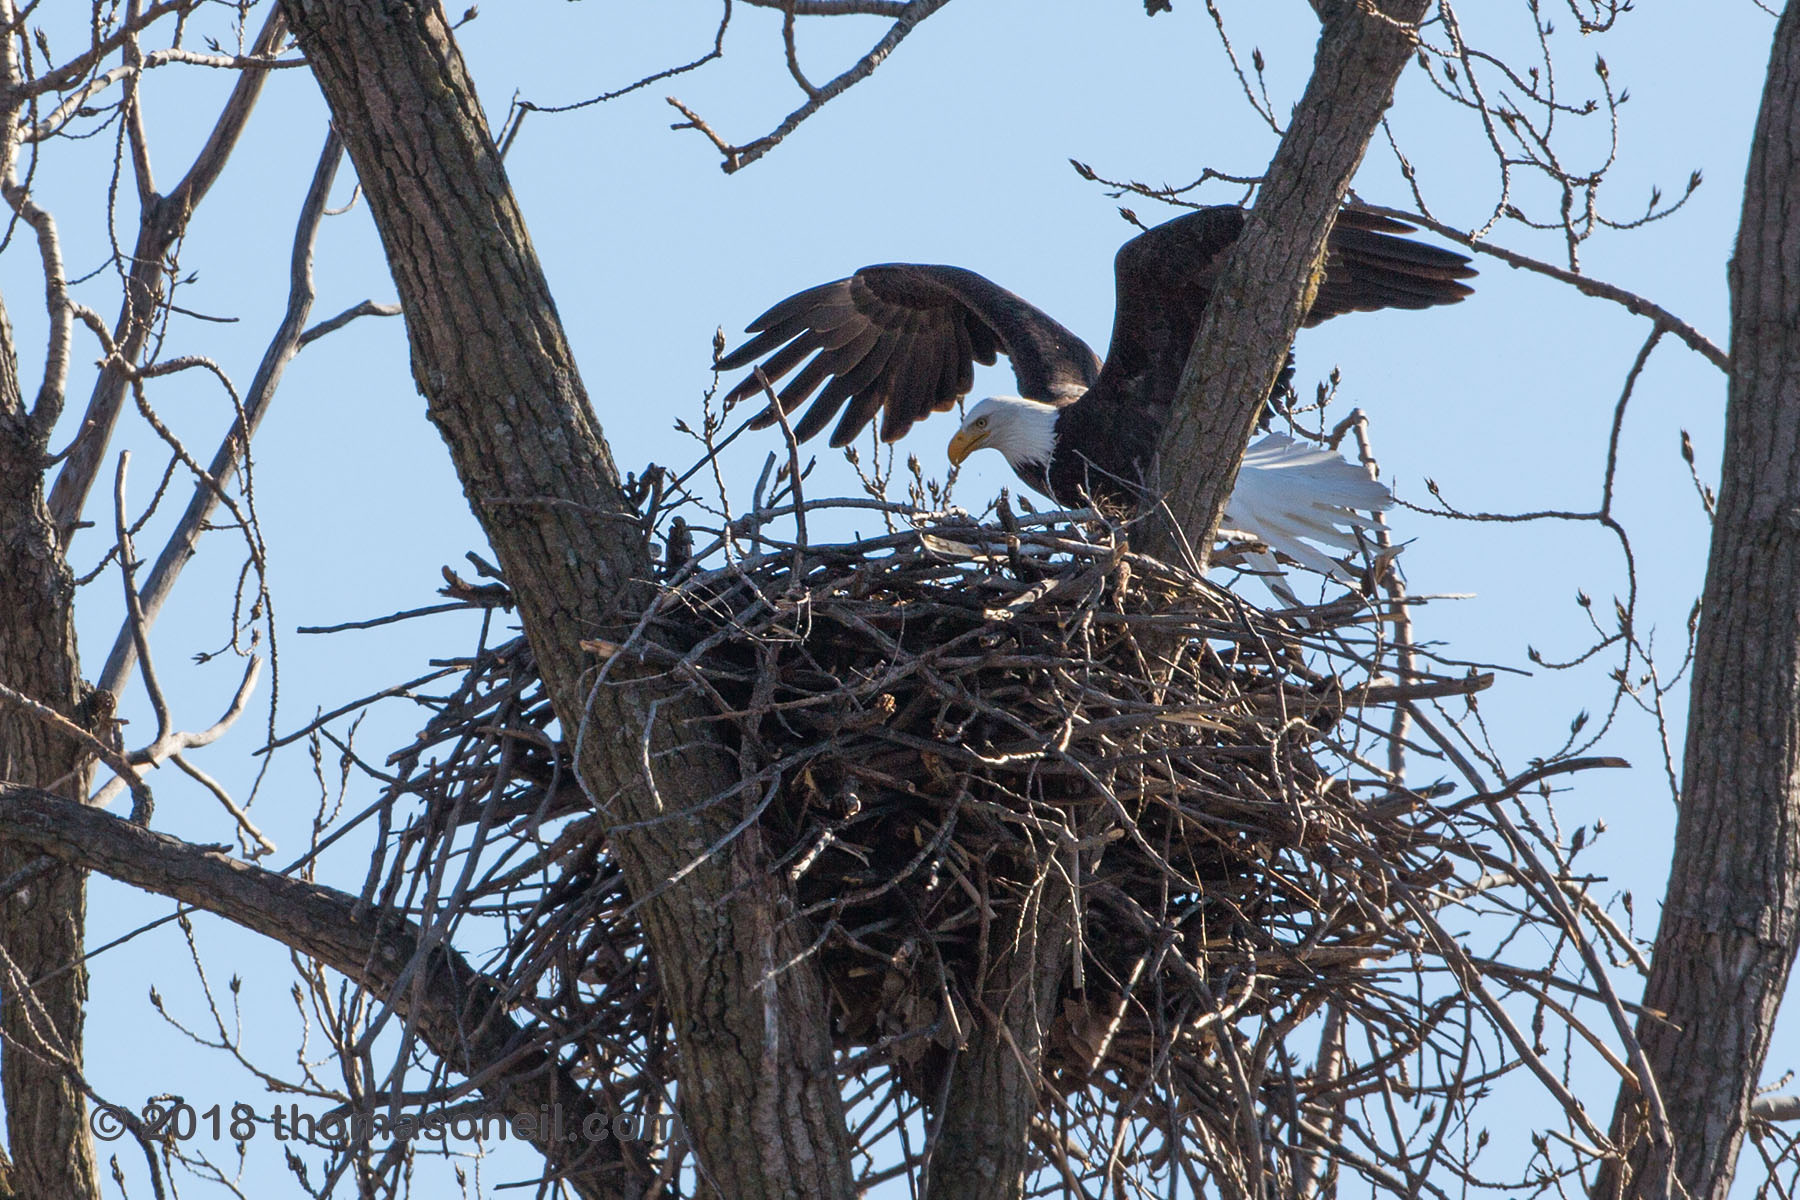 Bald eagle lands in the nest, Loess Bluffs National Wildlife Refuge, Missouri, December 2018.  Click for next photo.